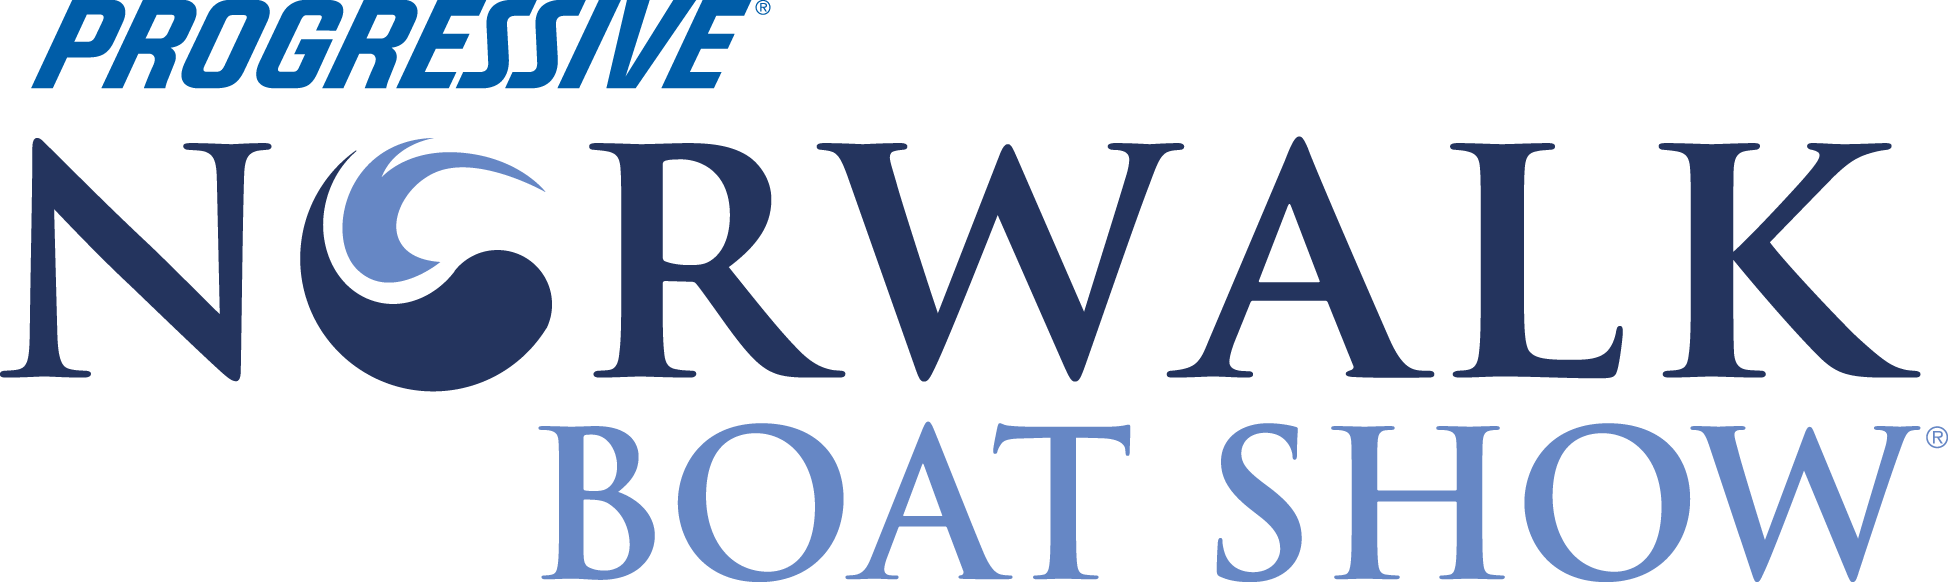 progressive norwalk boat show logo